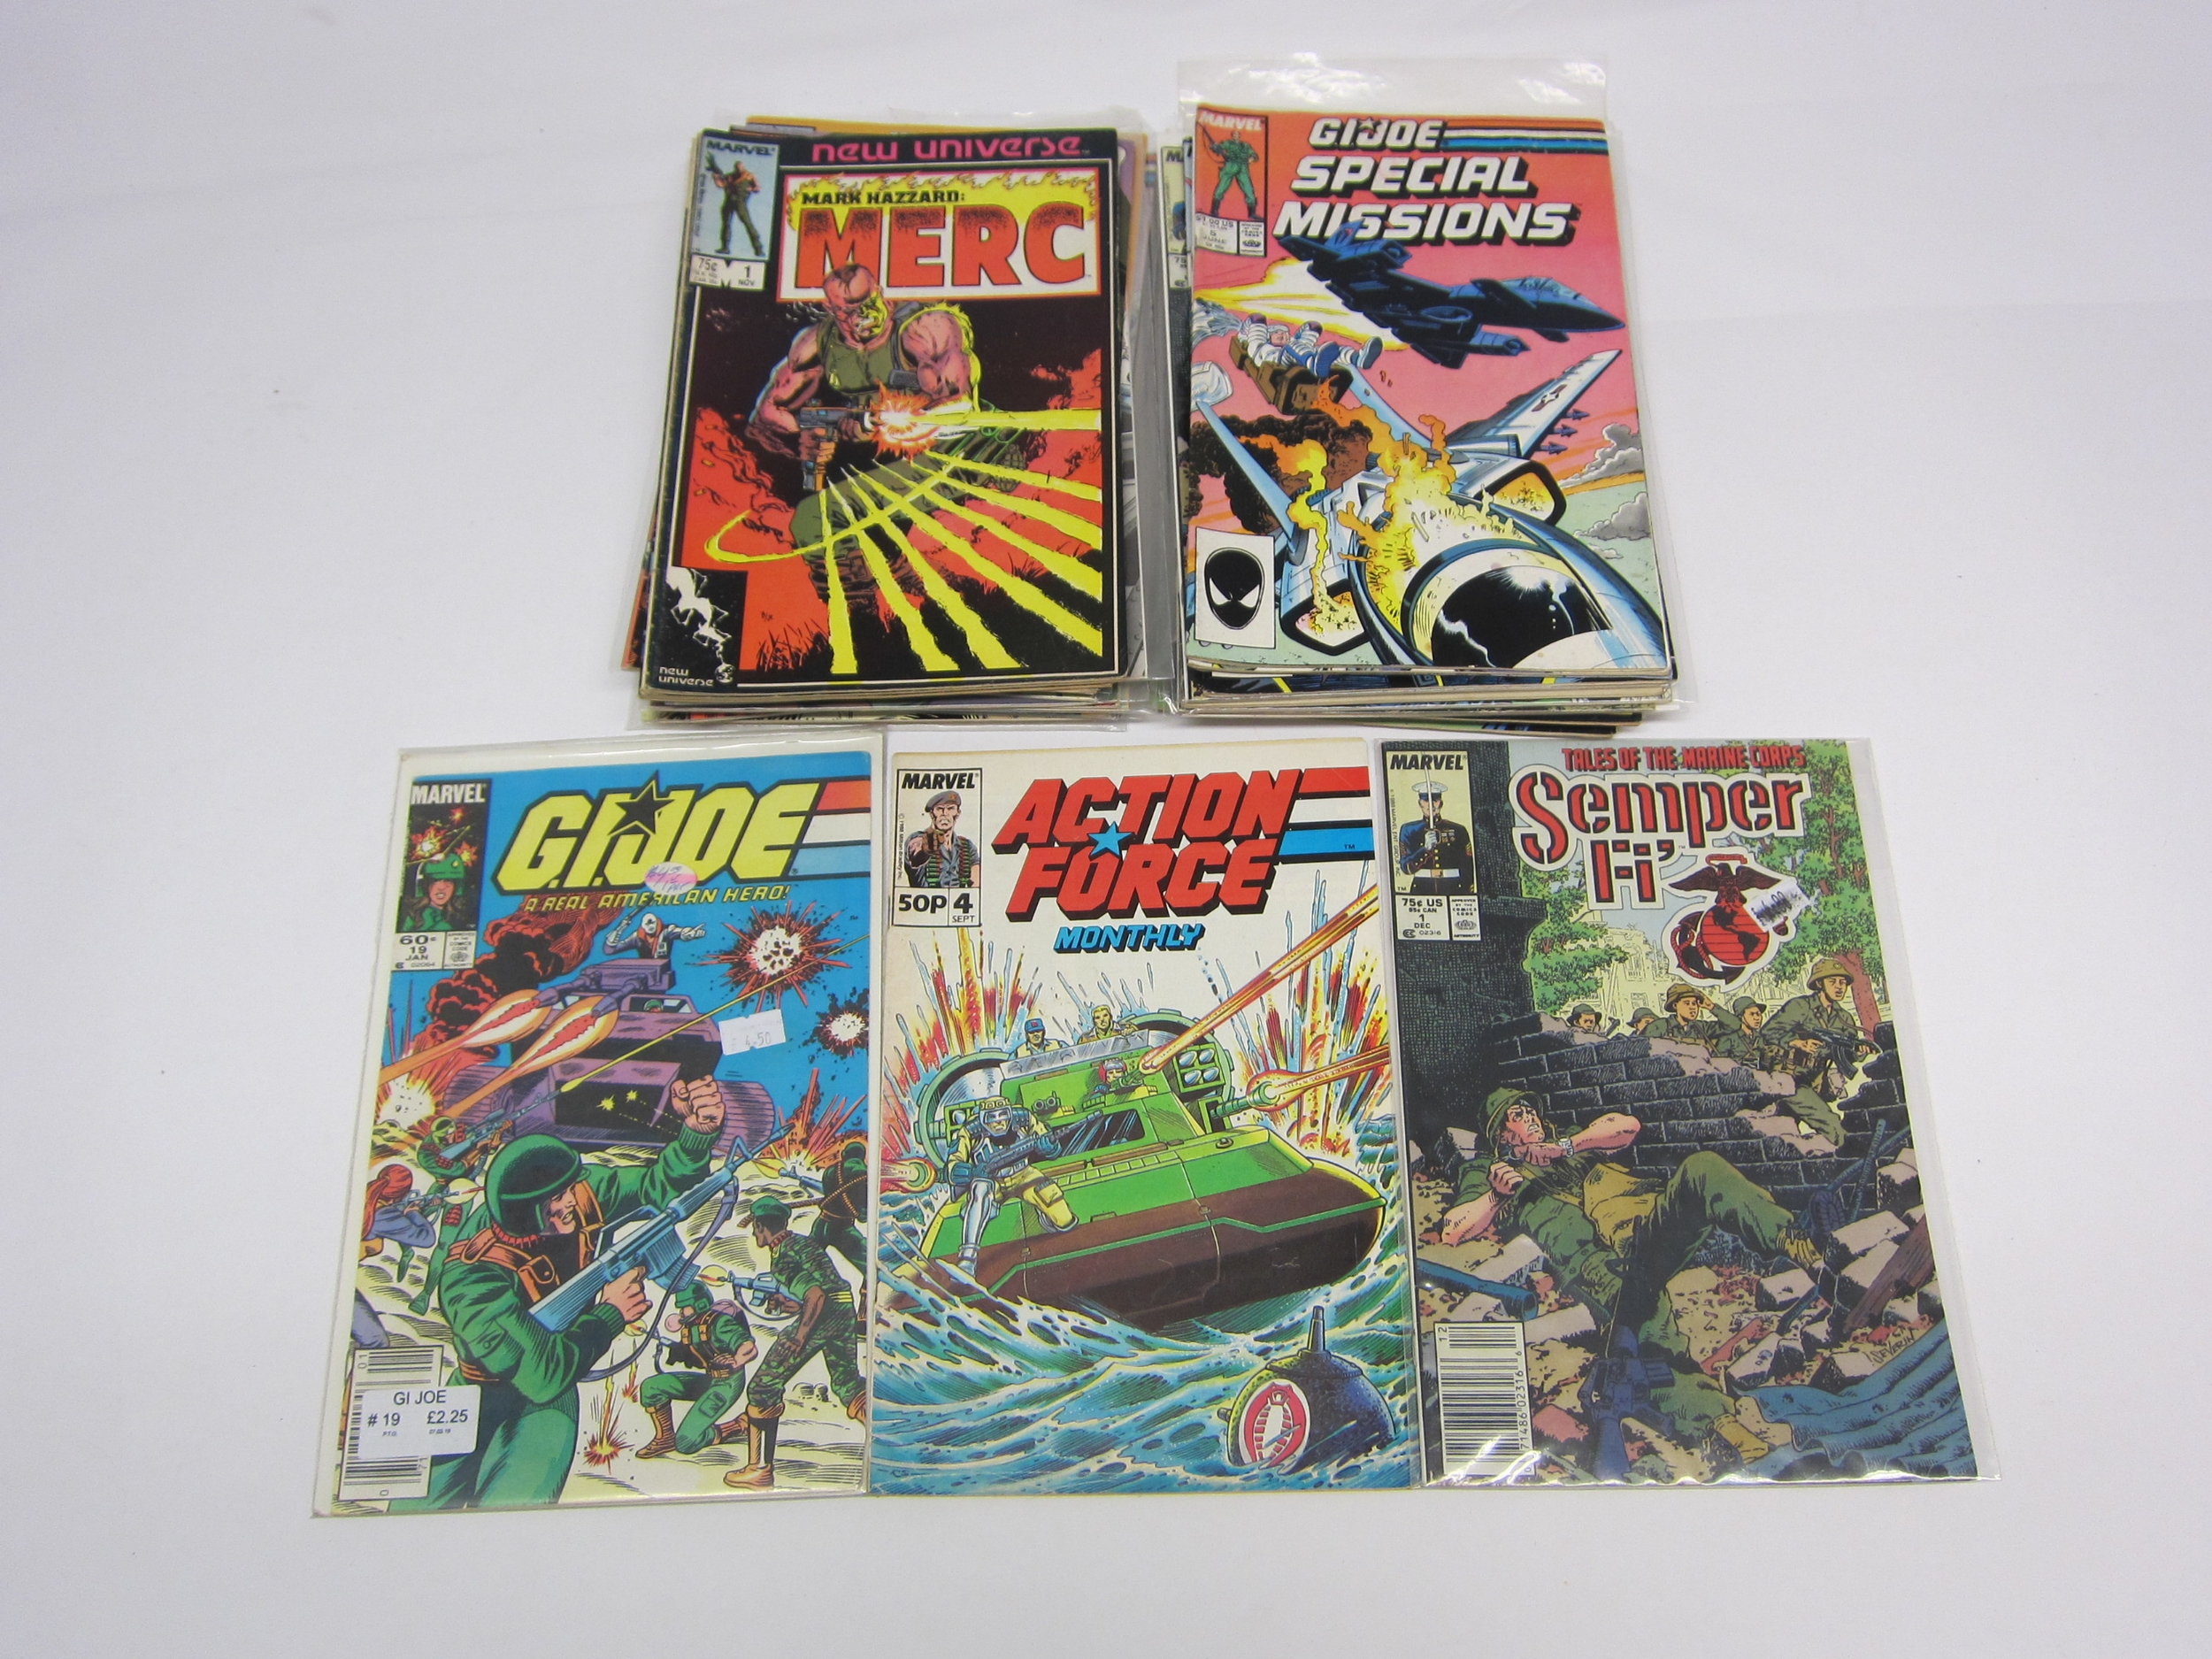 A collection of Marvel military related comics including 'GI Joe', 'Mark Hazzard: Merc', 'Sgt.